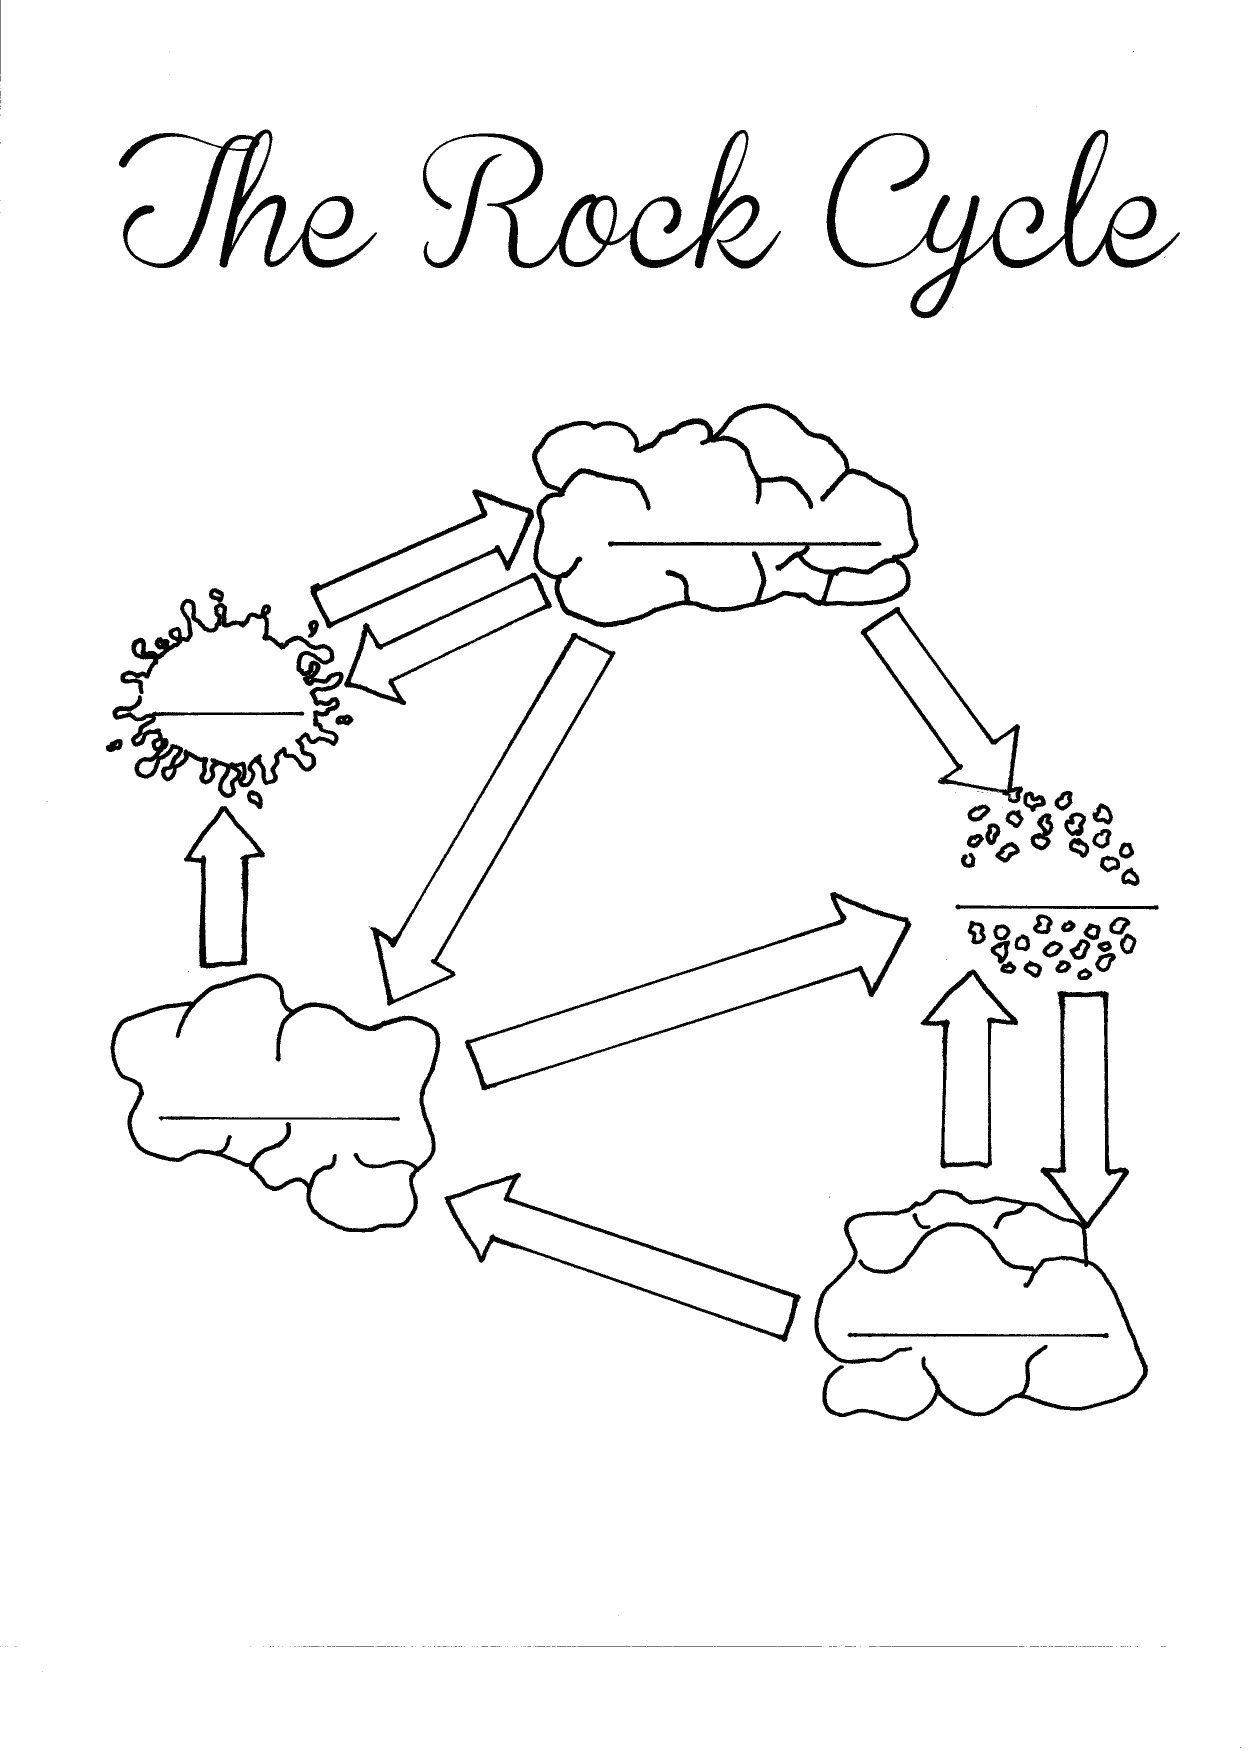 Carbon Cycle Diagram Worksheet Rock Cycle Fill In the Blank Diagram Diagram Base Website